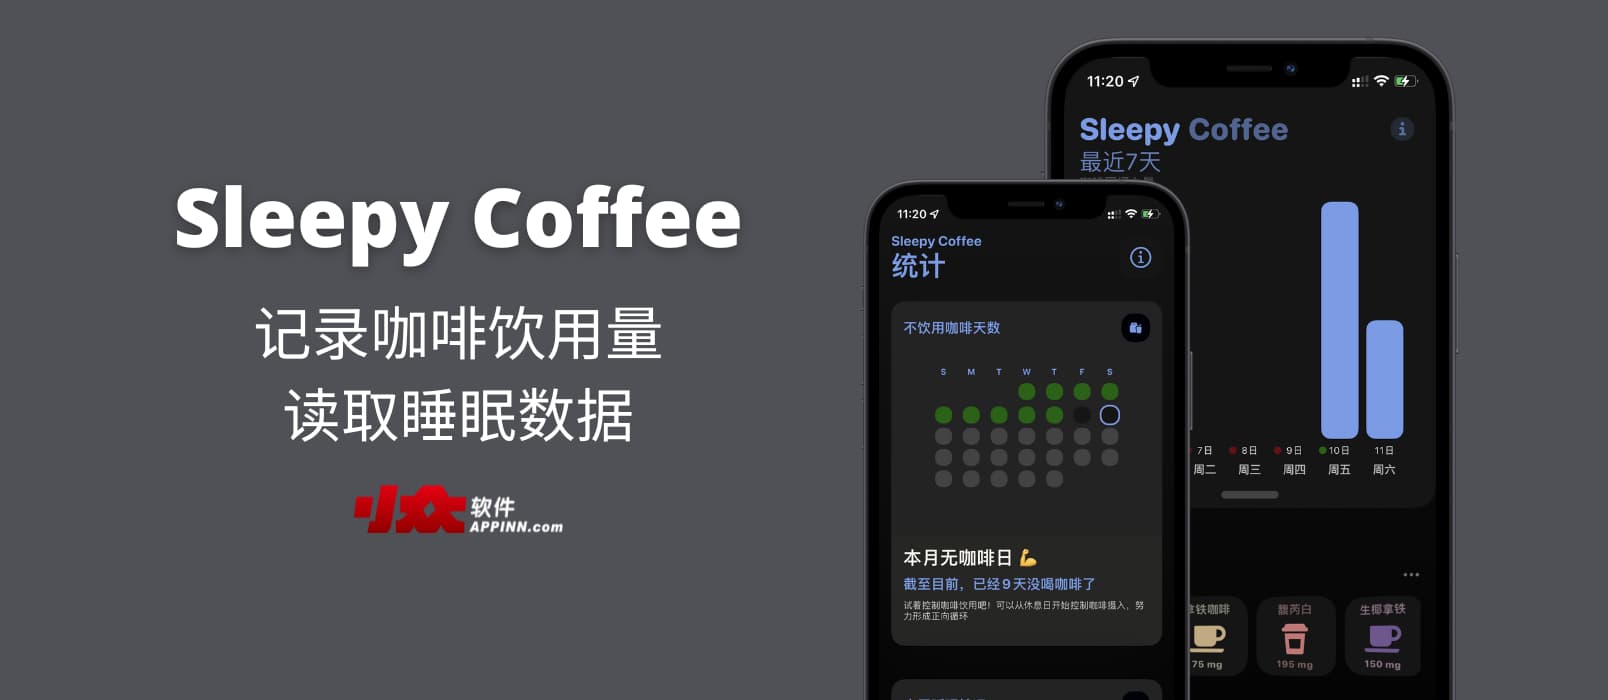 Sleepy Coffee - 记录咖啡饮用量，读取睡眠数据，揭开咖啡与睡眠的关系[iPhone]